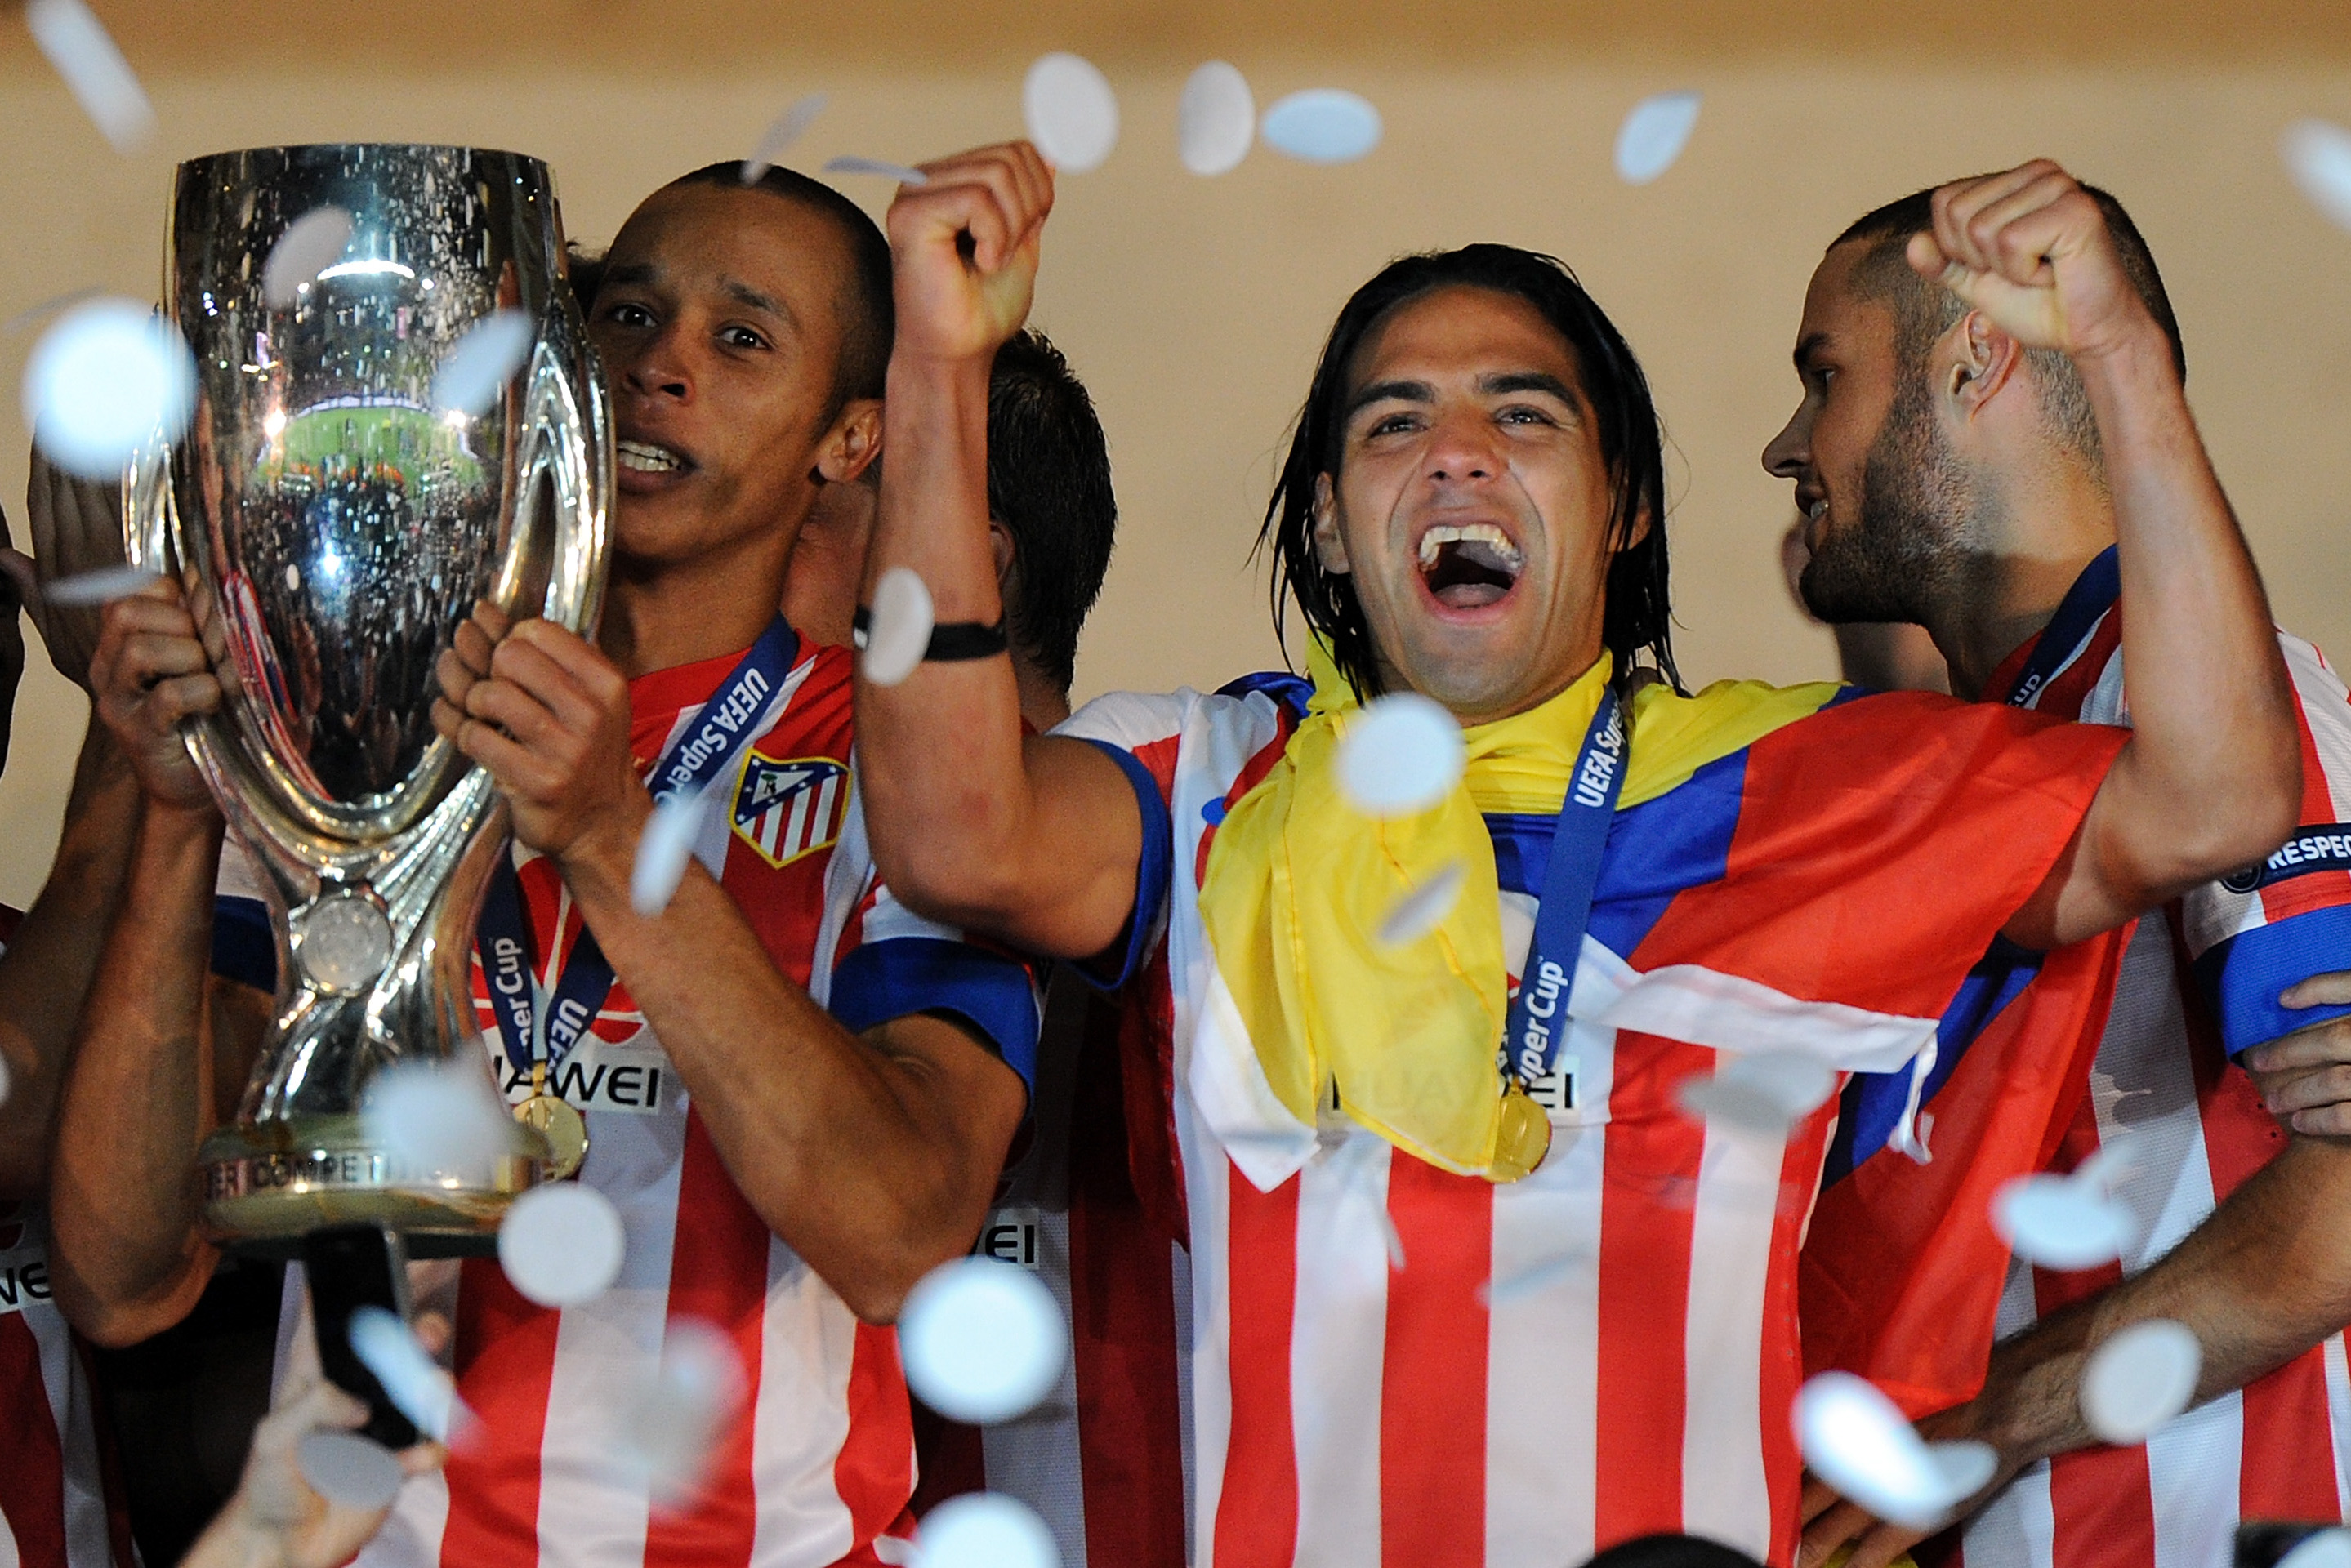 Classic Teams #2  Atlético de Madrid (2012-14) - Get Spanish Football News